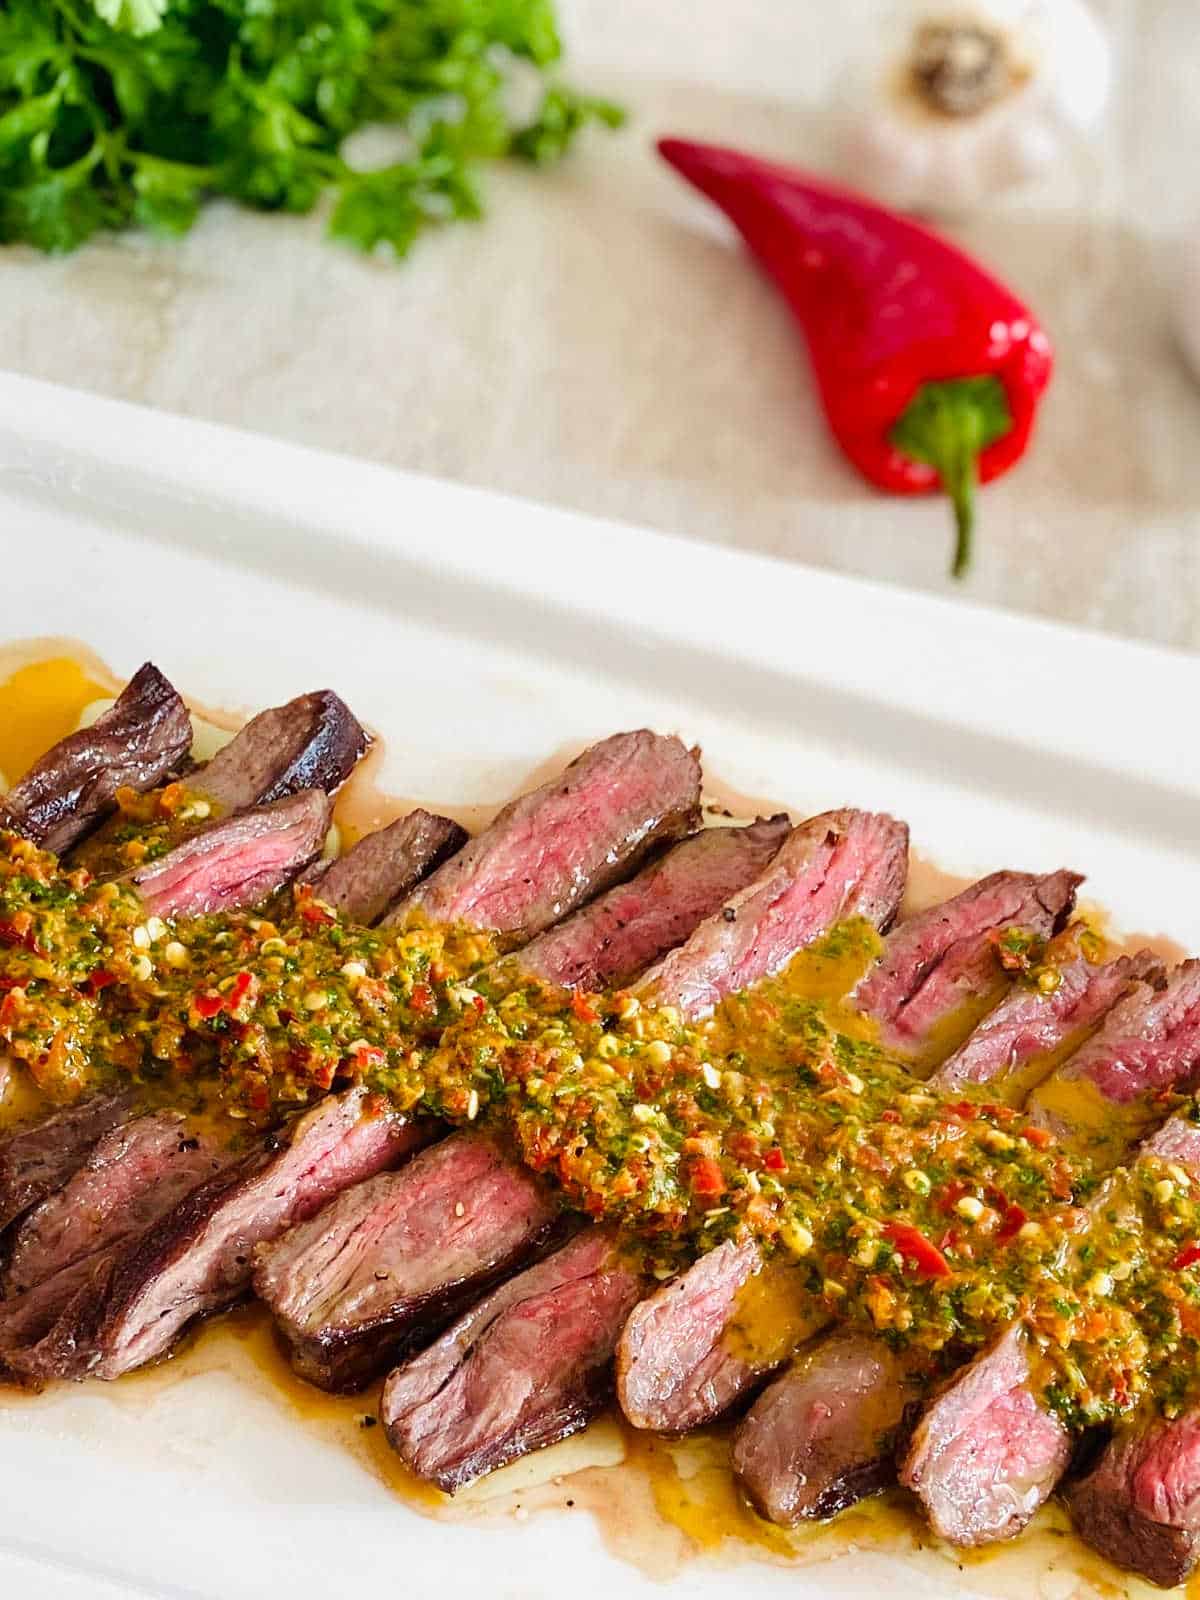 denver steak sliced with red pepper and garlic in background